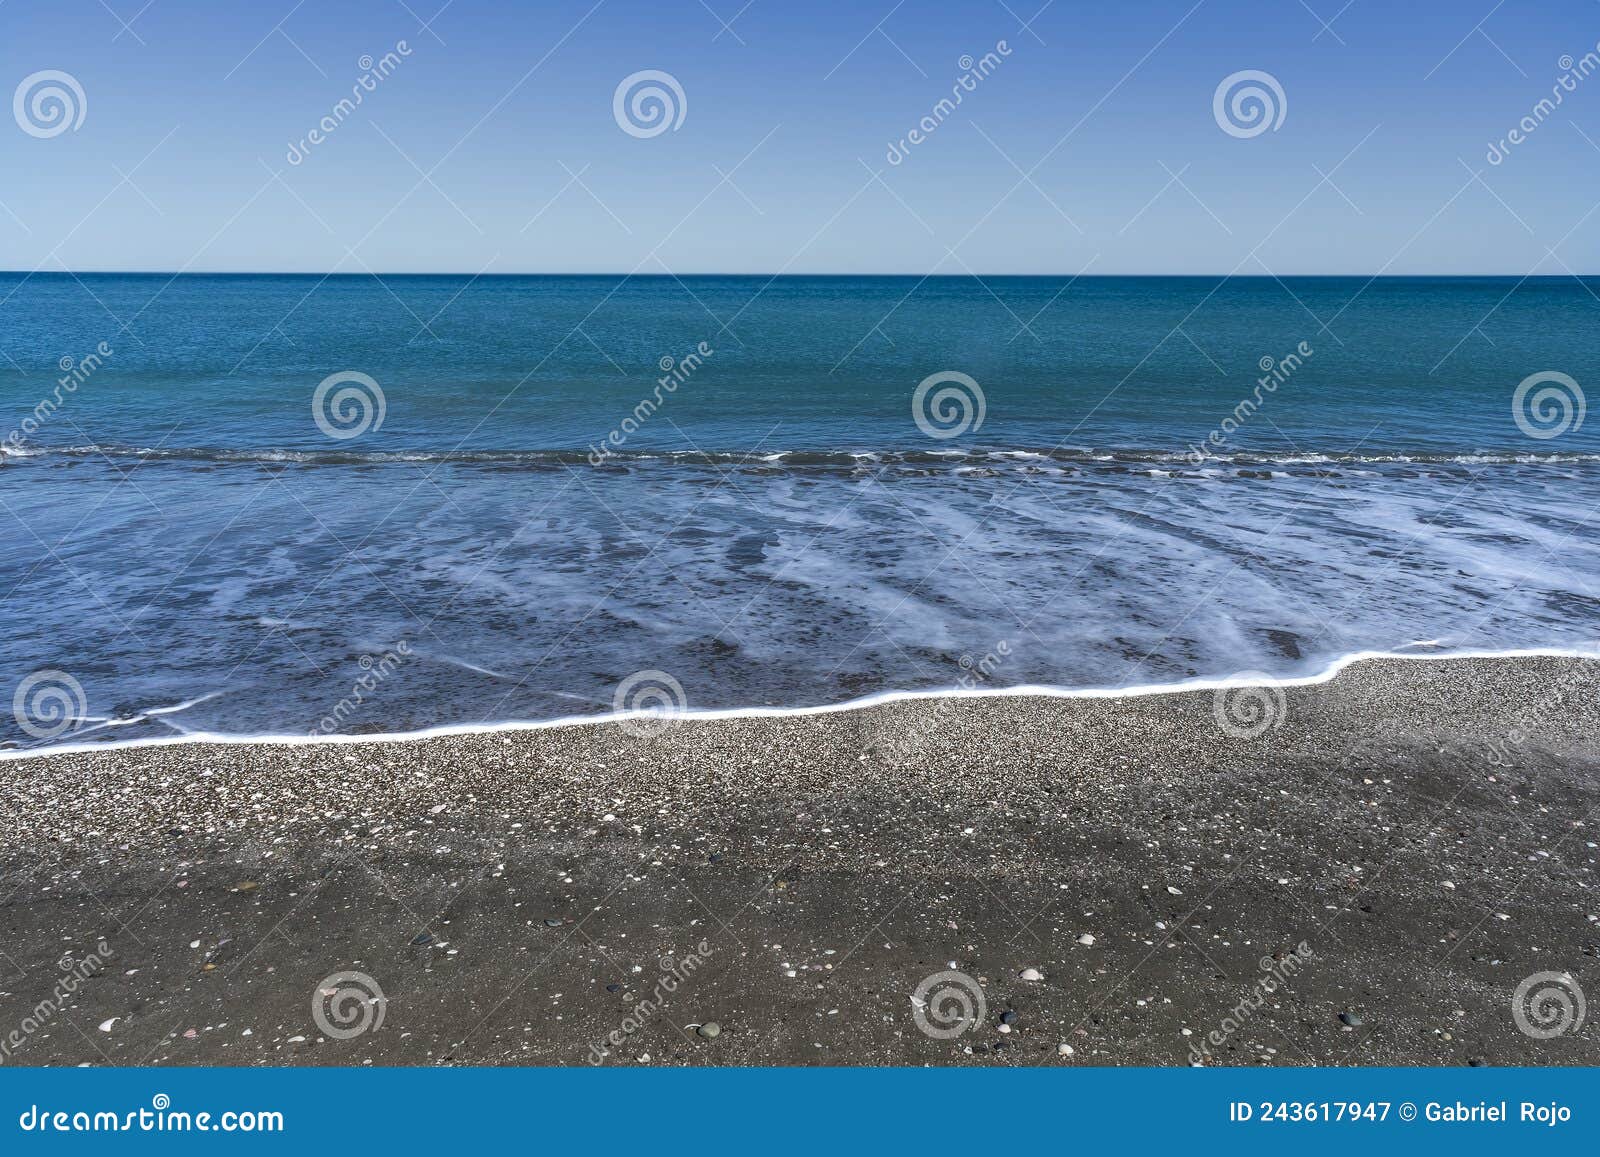 shell beach, san antonio east harbor, rio negro,